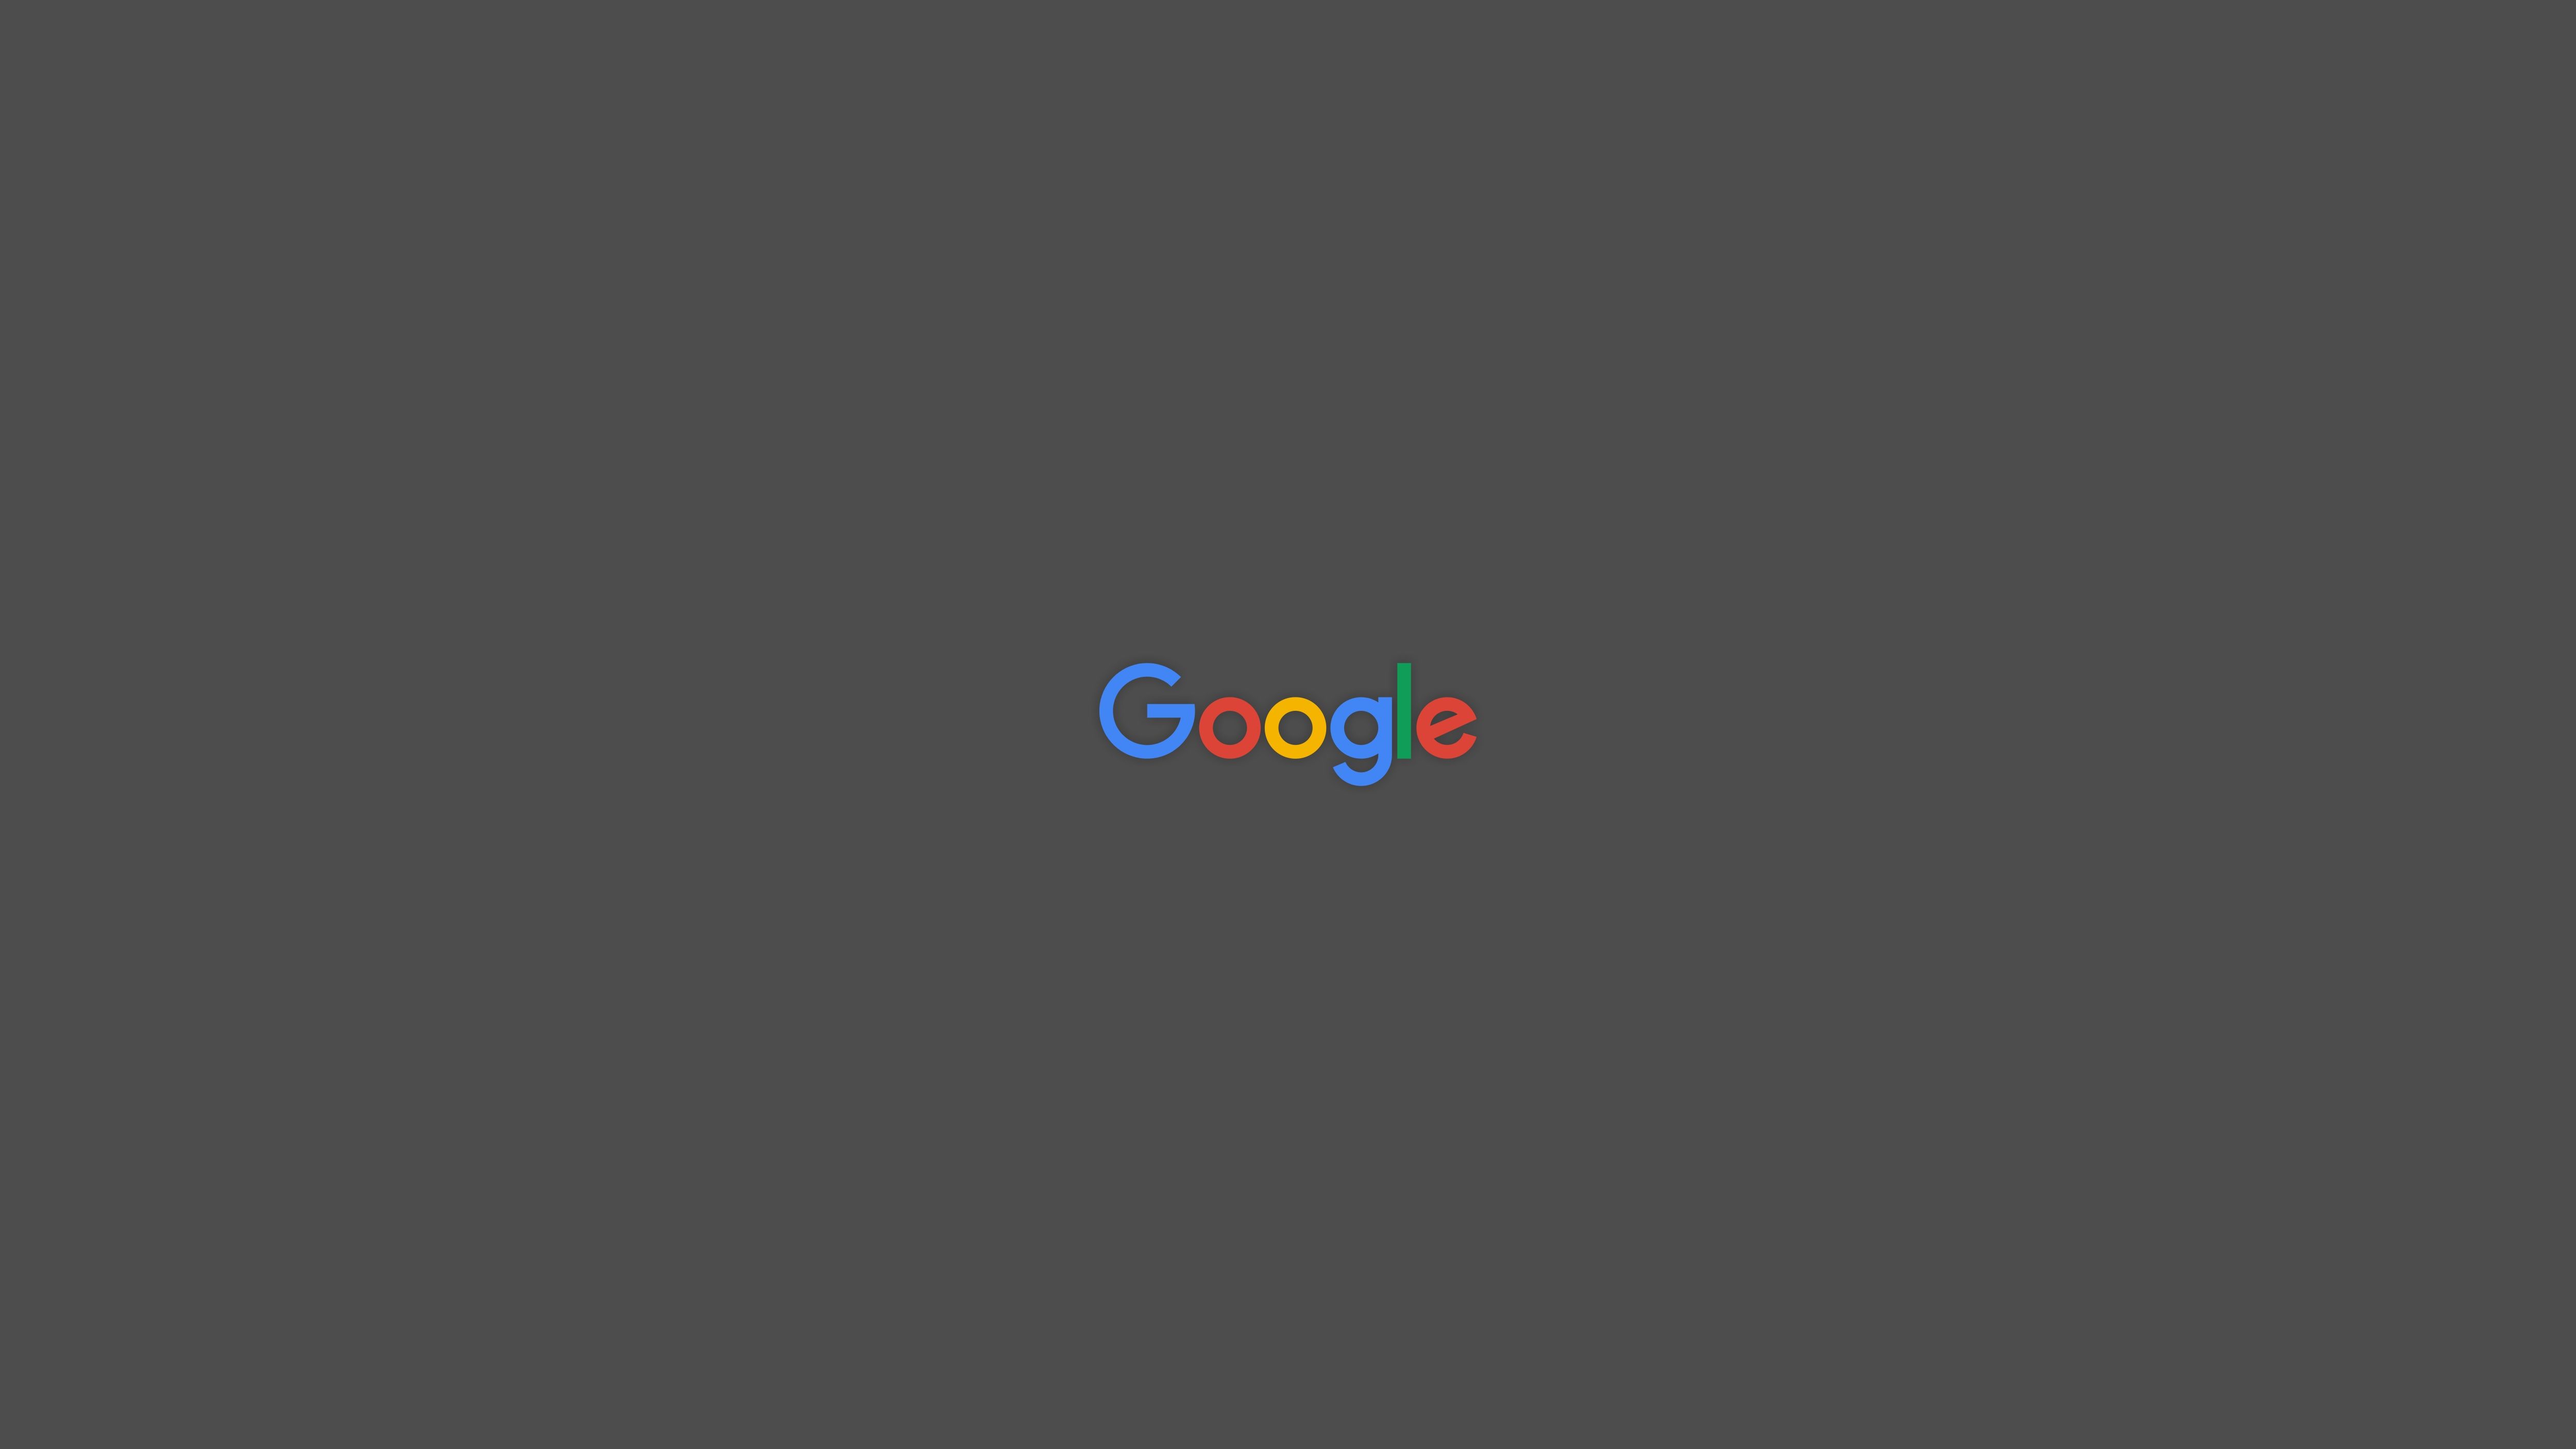 56 Google Wallpaper Downloads On Wallpapersafari